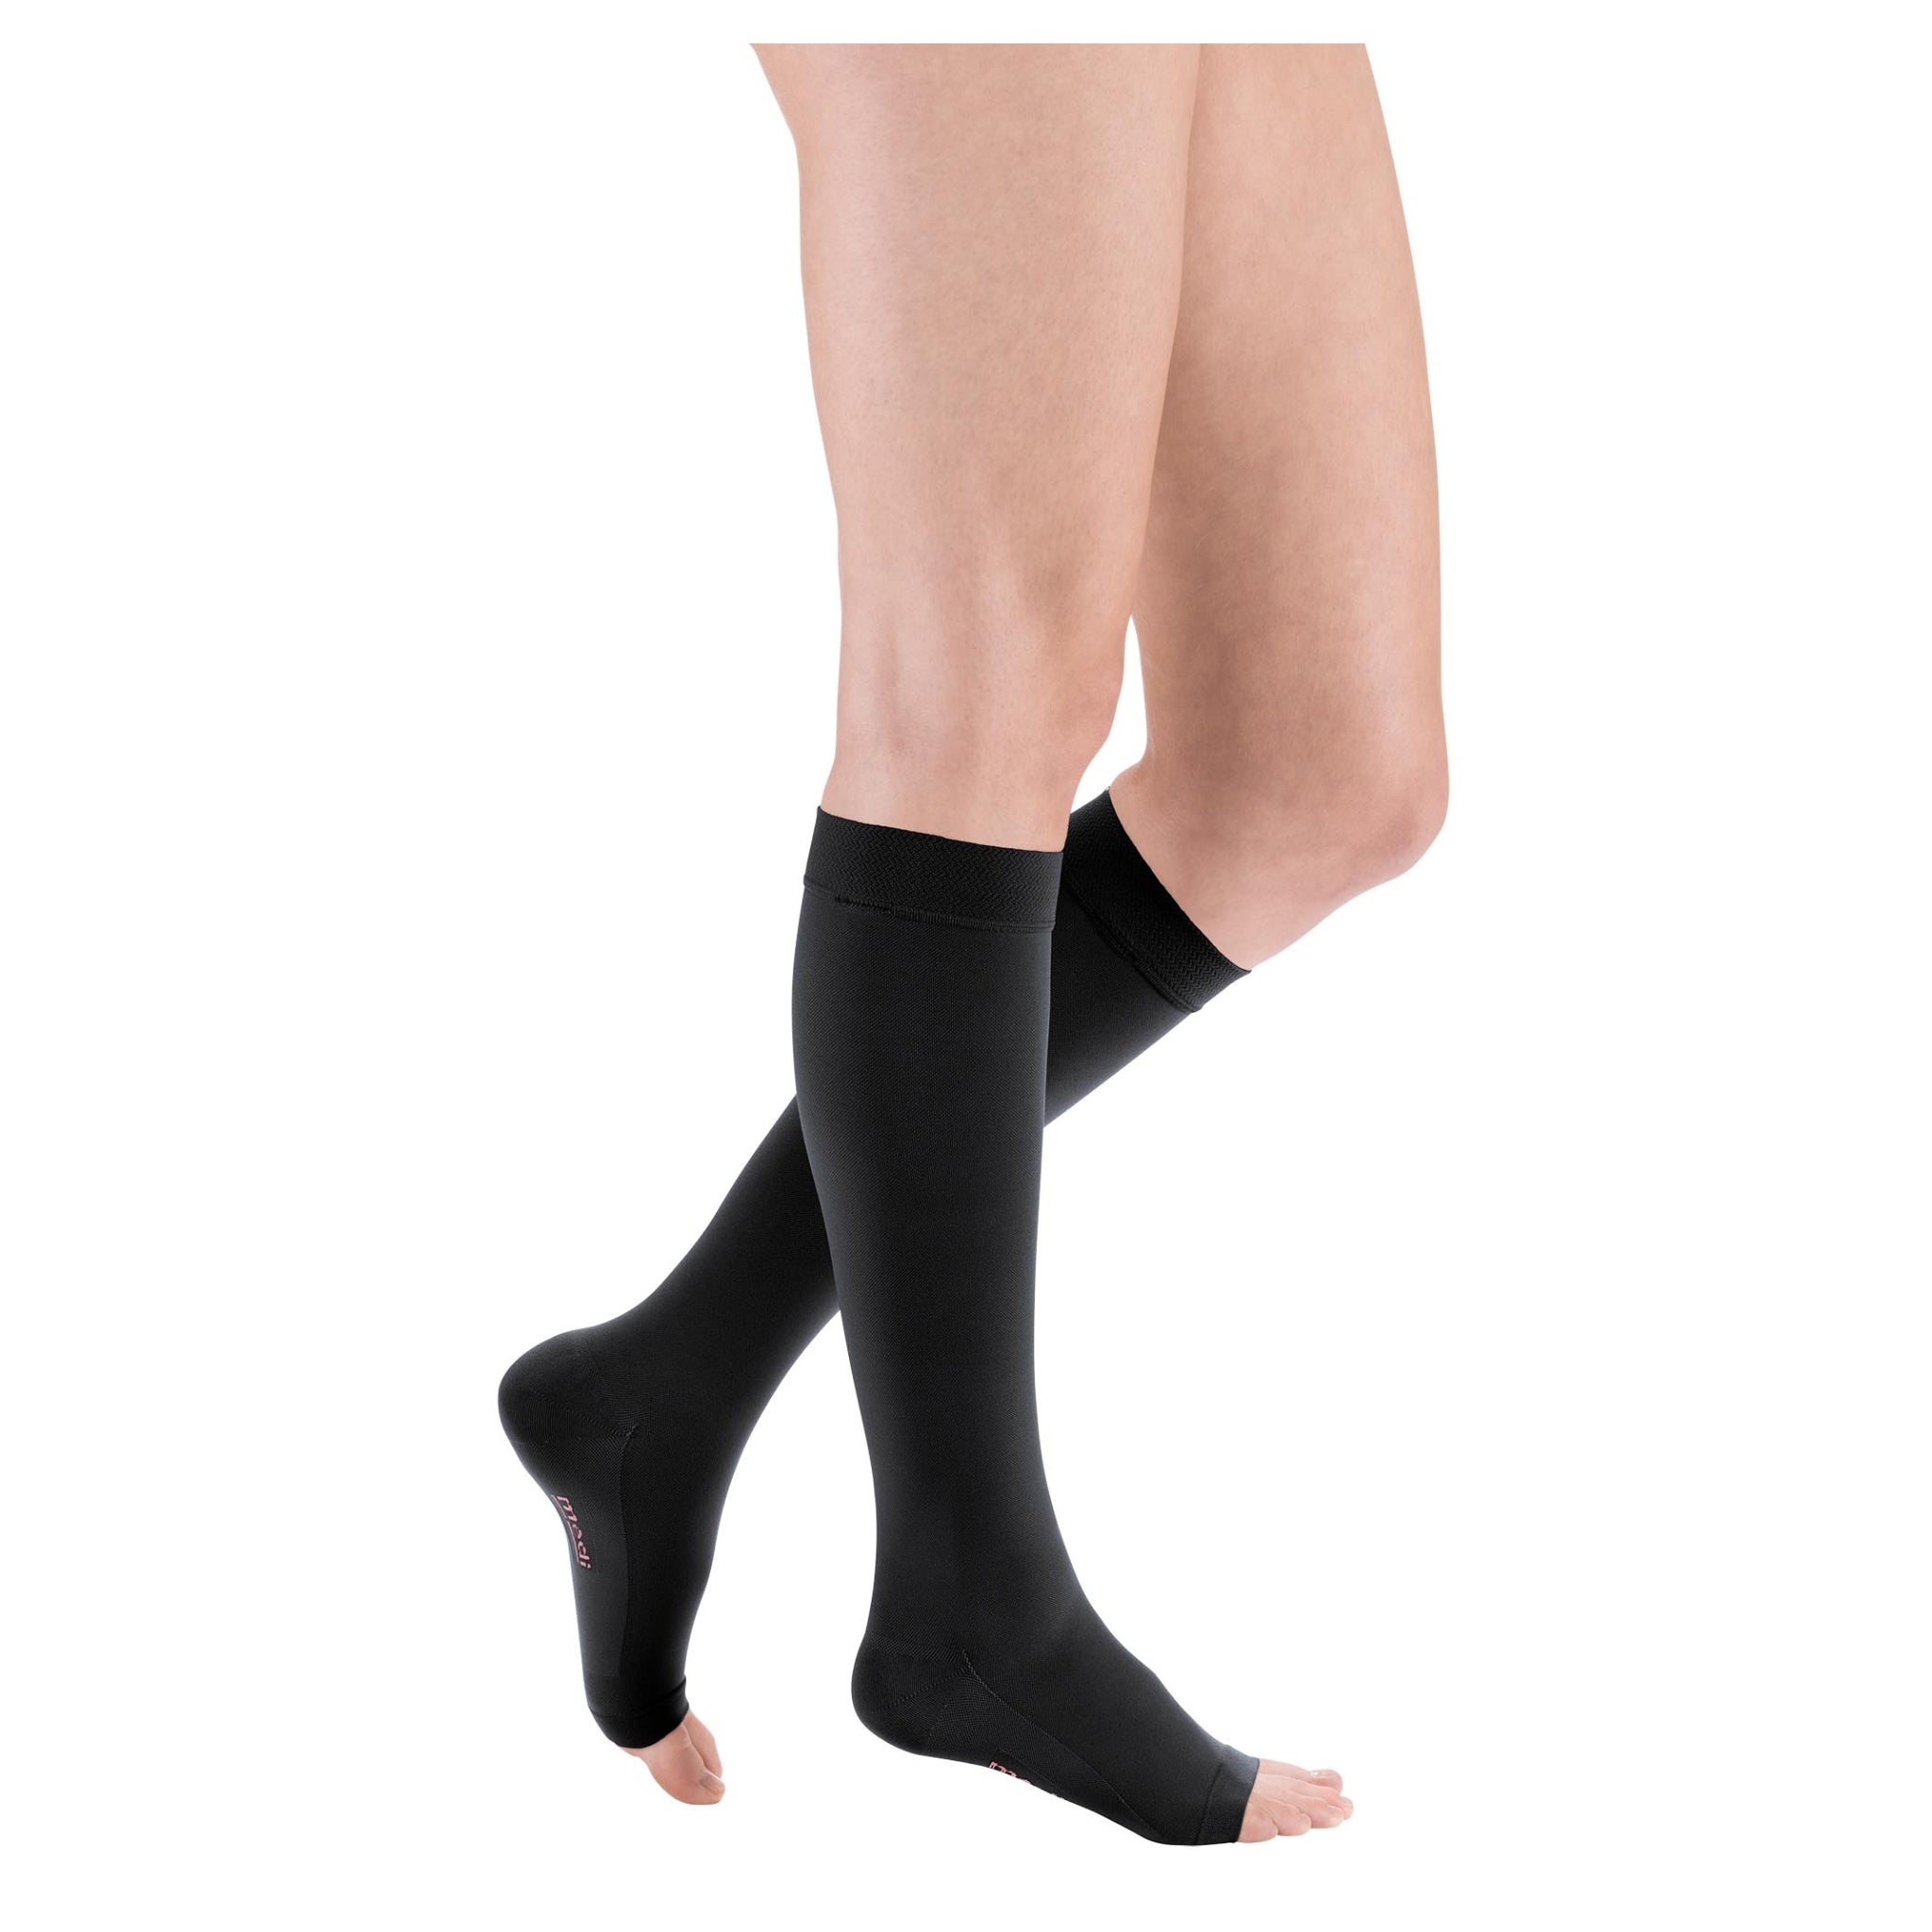 mediven comfort Below Knee Compression Stockings Black